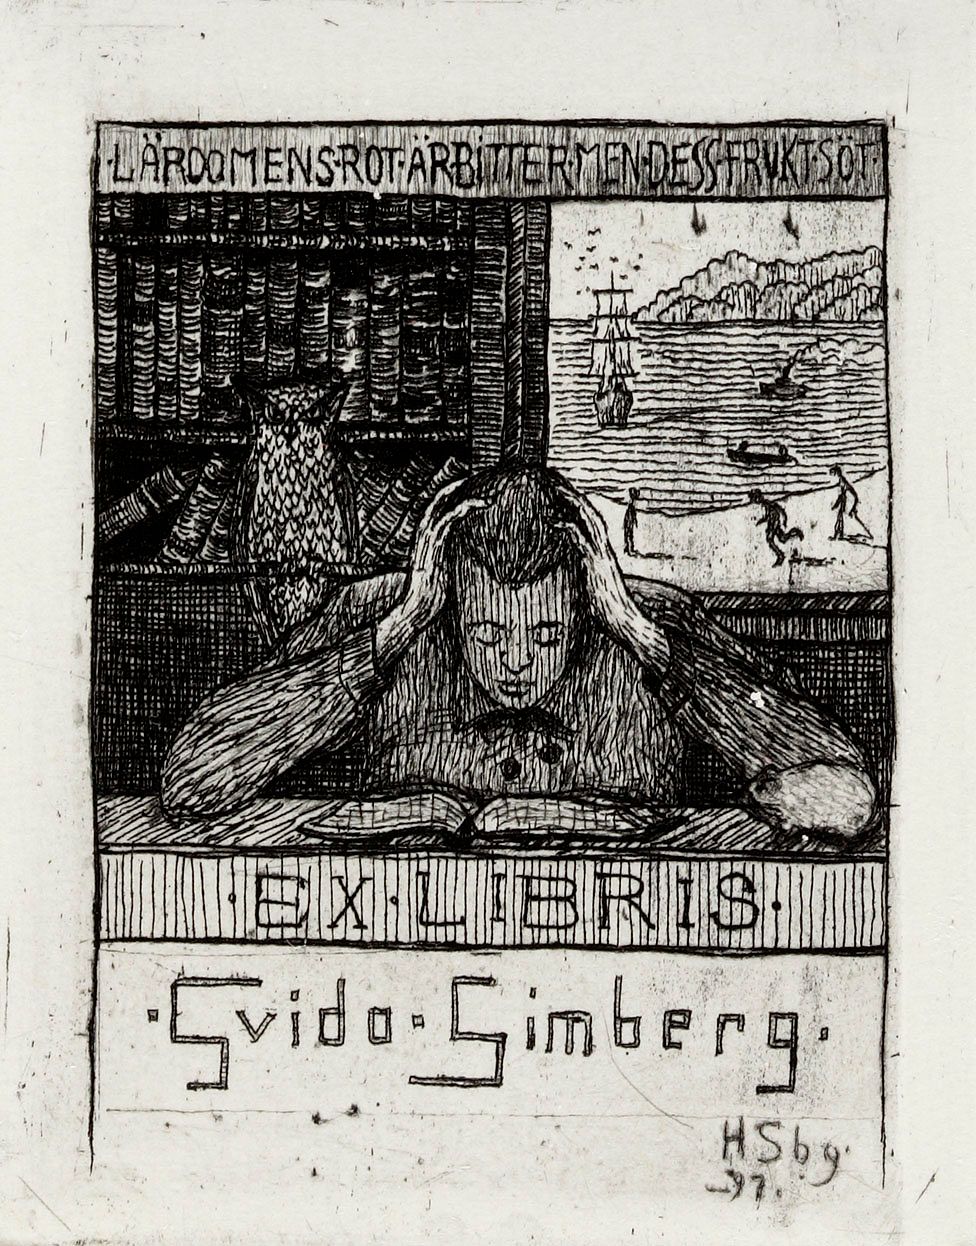 Exlibris guido simberg ii, 1897 by Hugo Simberg